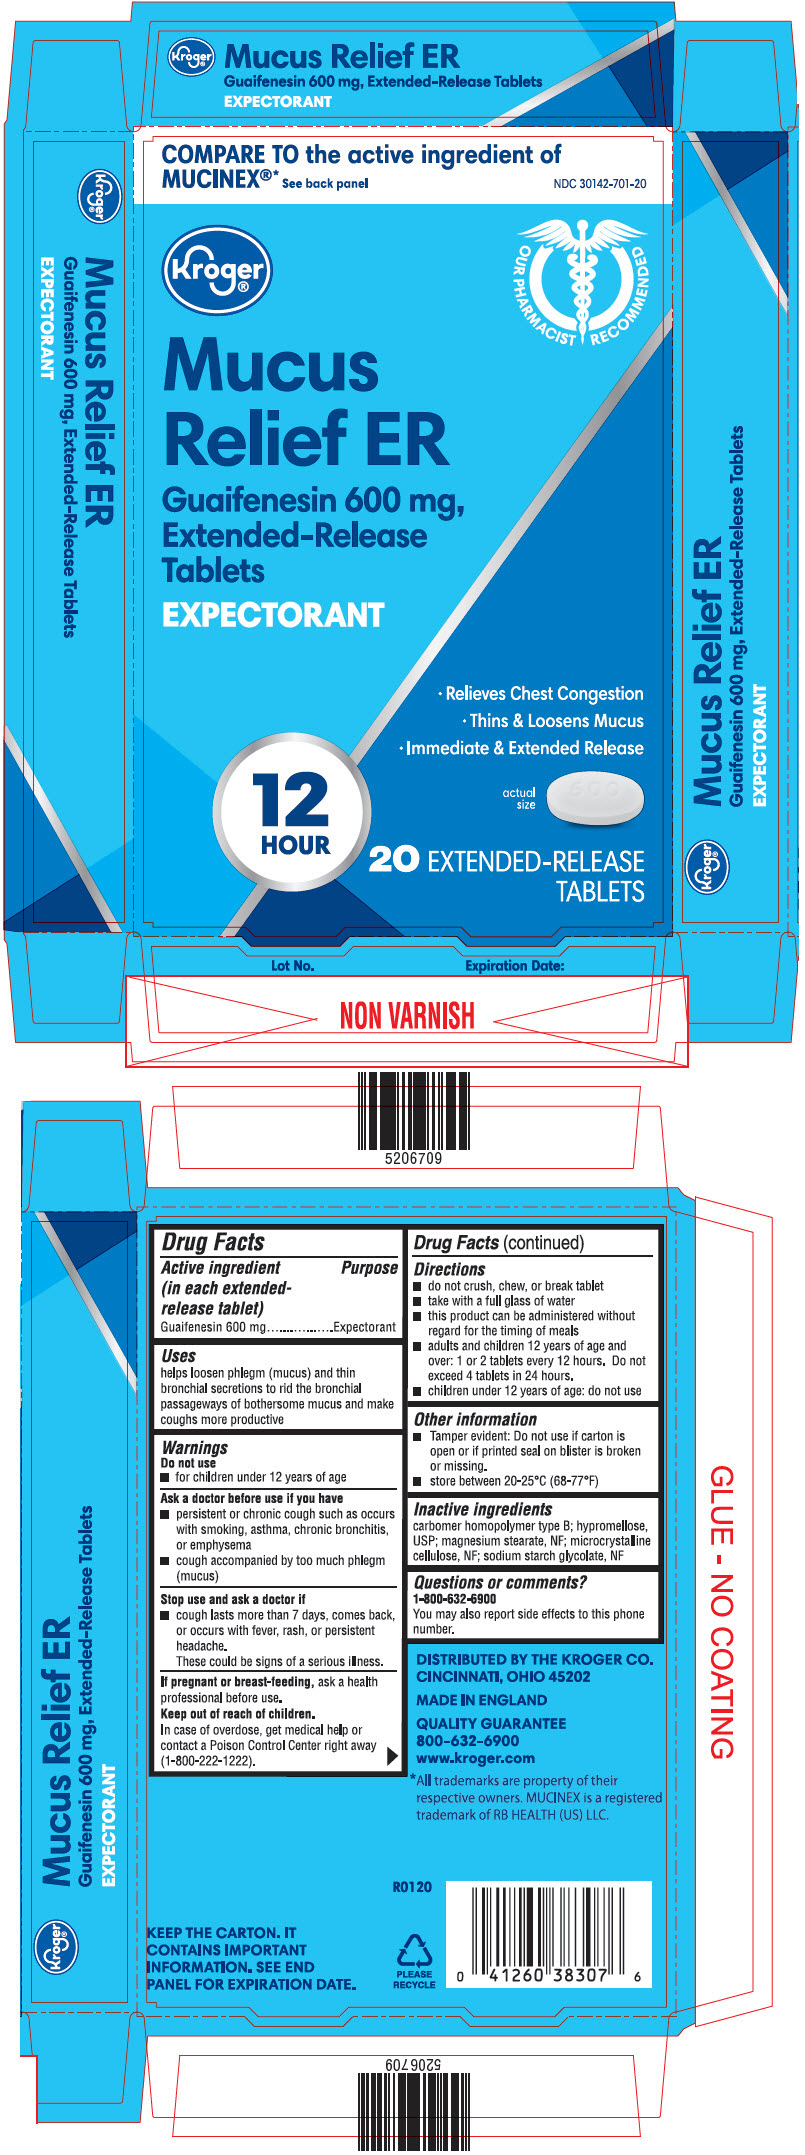 PRINCIPAL DISPLAY PANEL - 600 mg Tablet Blister Pack Carton